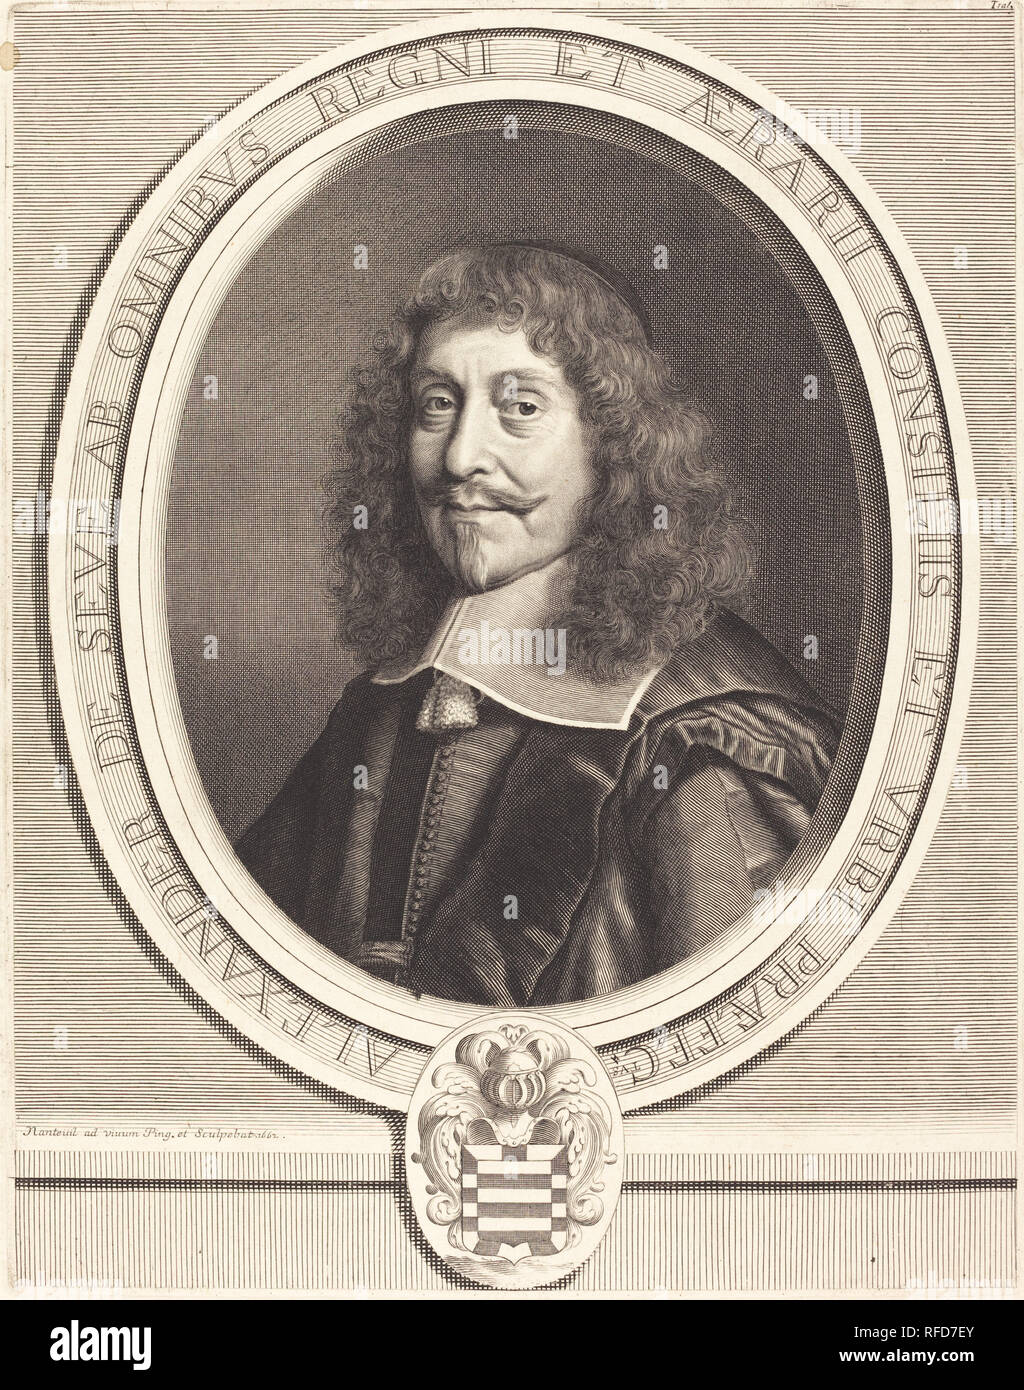 Alexander de Seve. Dated: 1662. Medium: engraving. Museum: National Gallery of Art, Washington DC. Author: Robert Nanteuil. Stock Photo